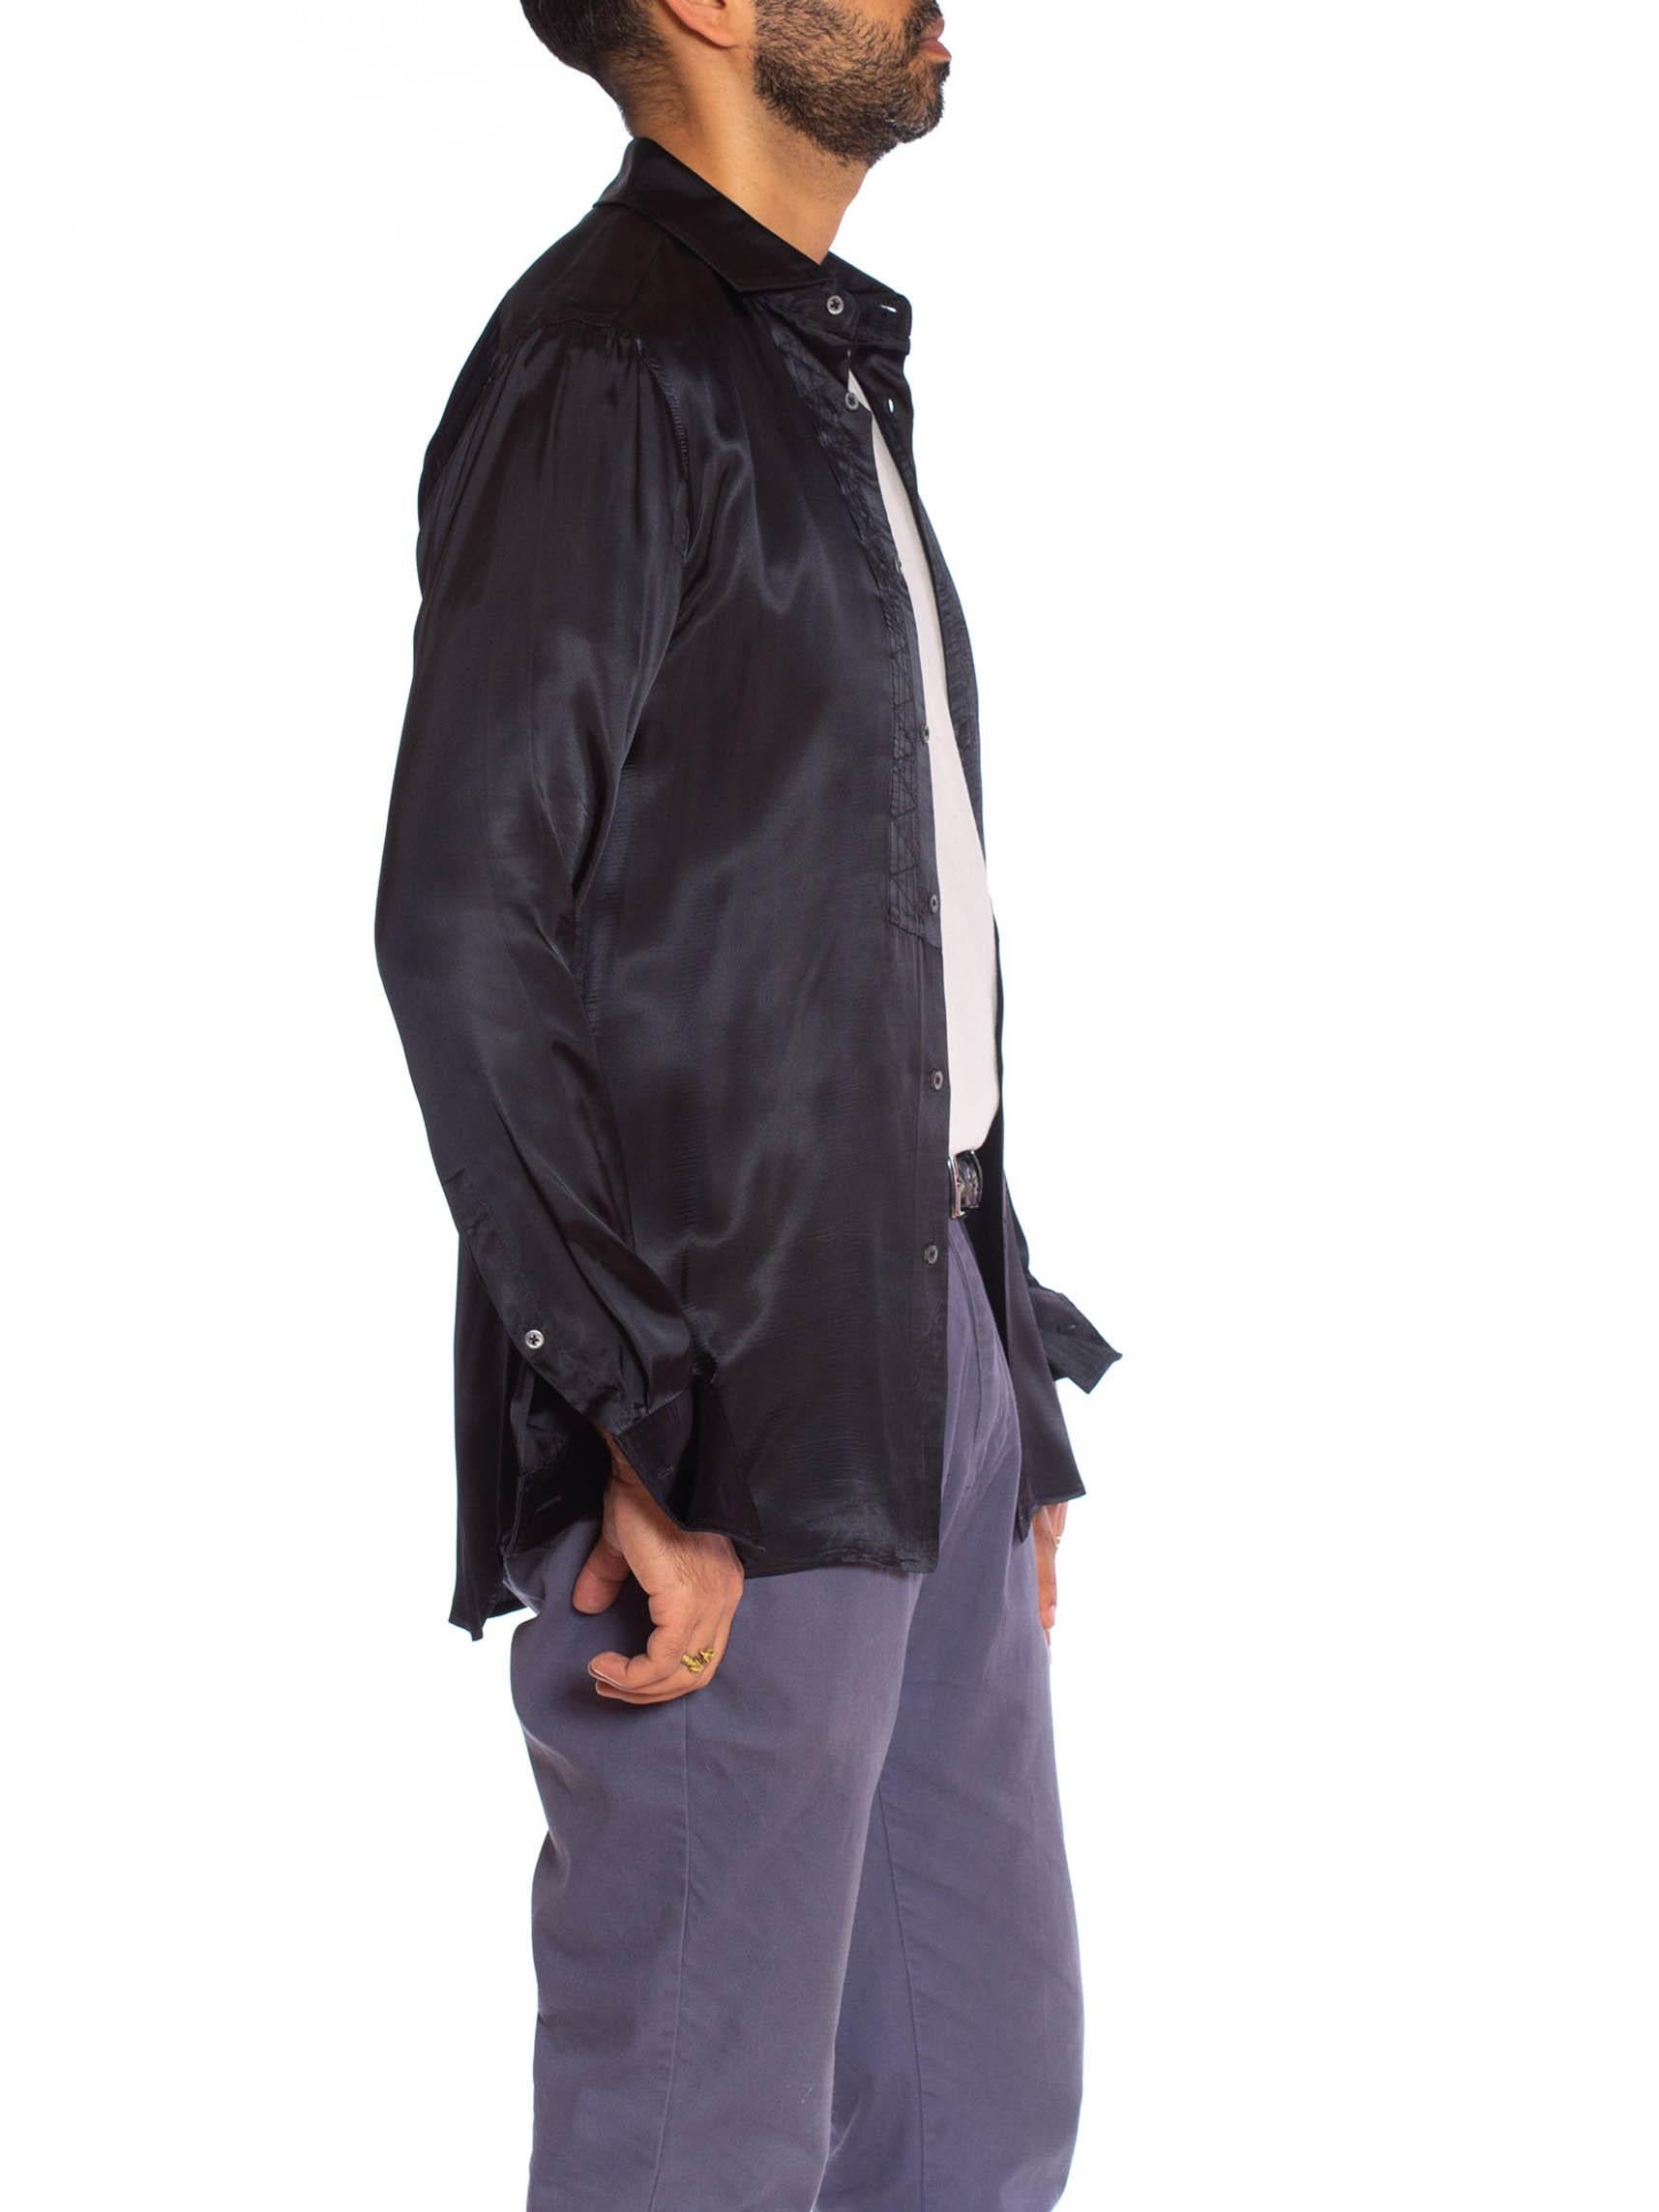 2000S JOHN GALLIANO Black Rayon Satin Formal Tuxedo Shirt With French Cuffs 5